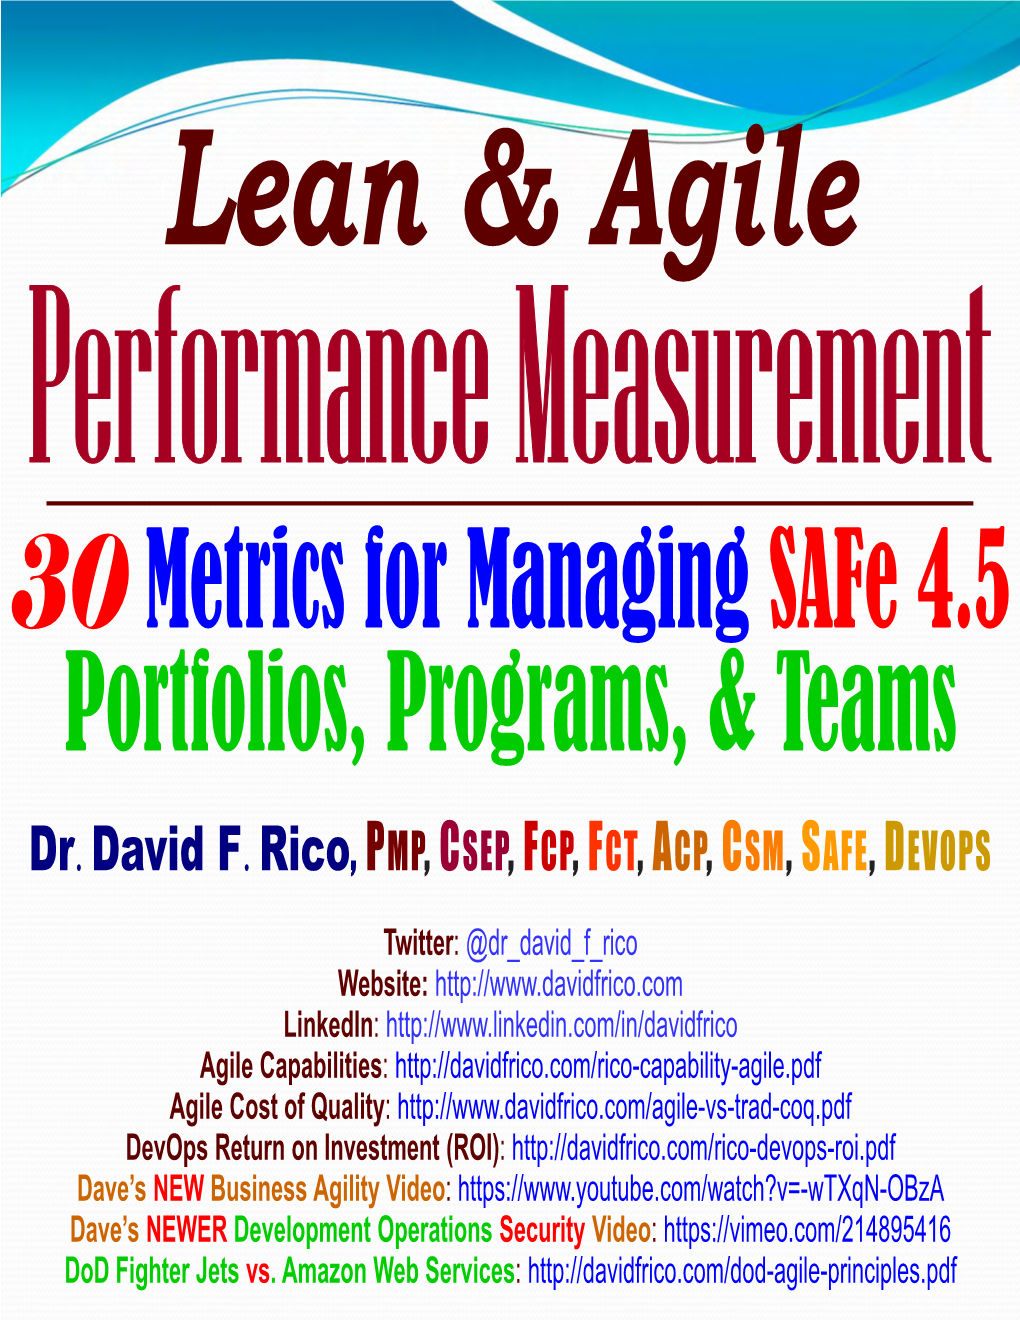 30 Metrics for Managing Safe 4.5 Portfolios, Programs, & Teams